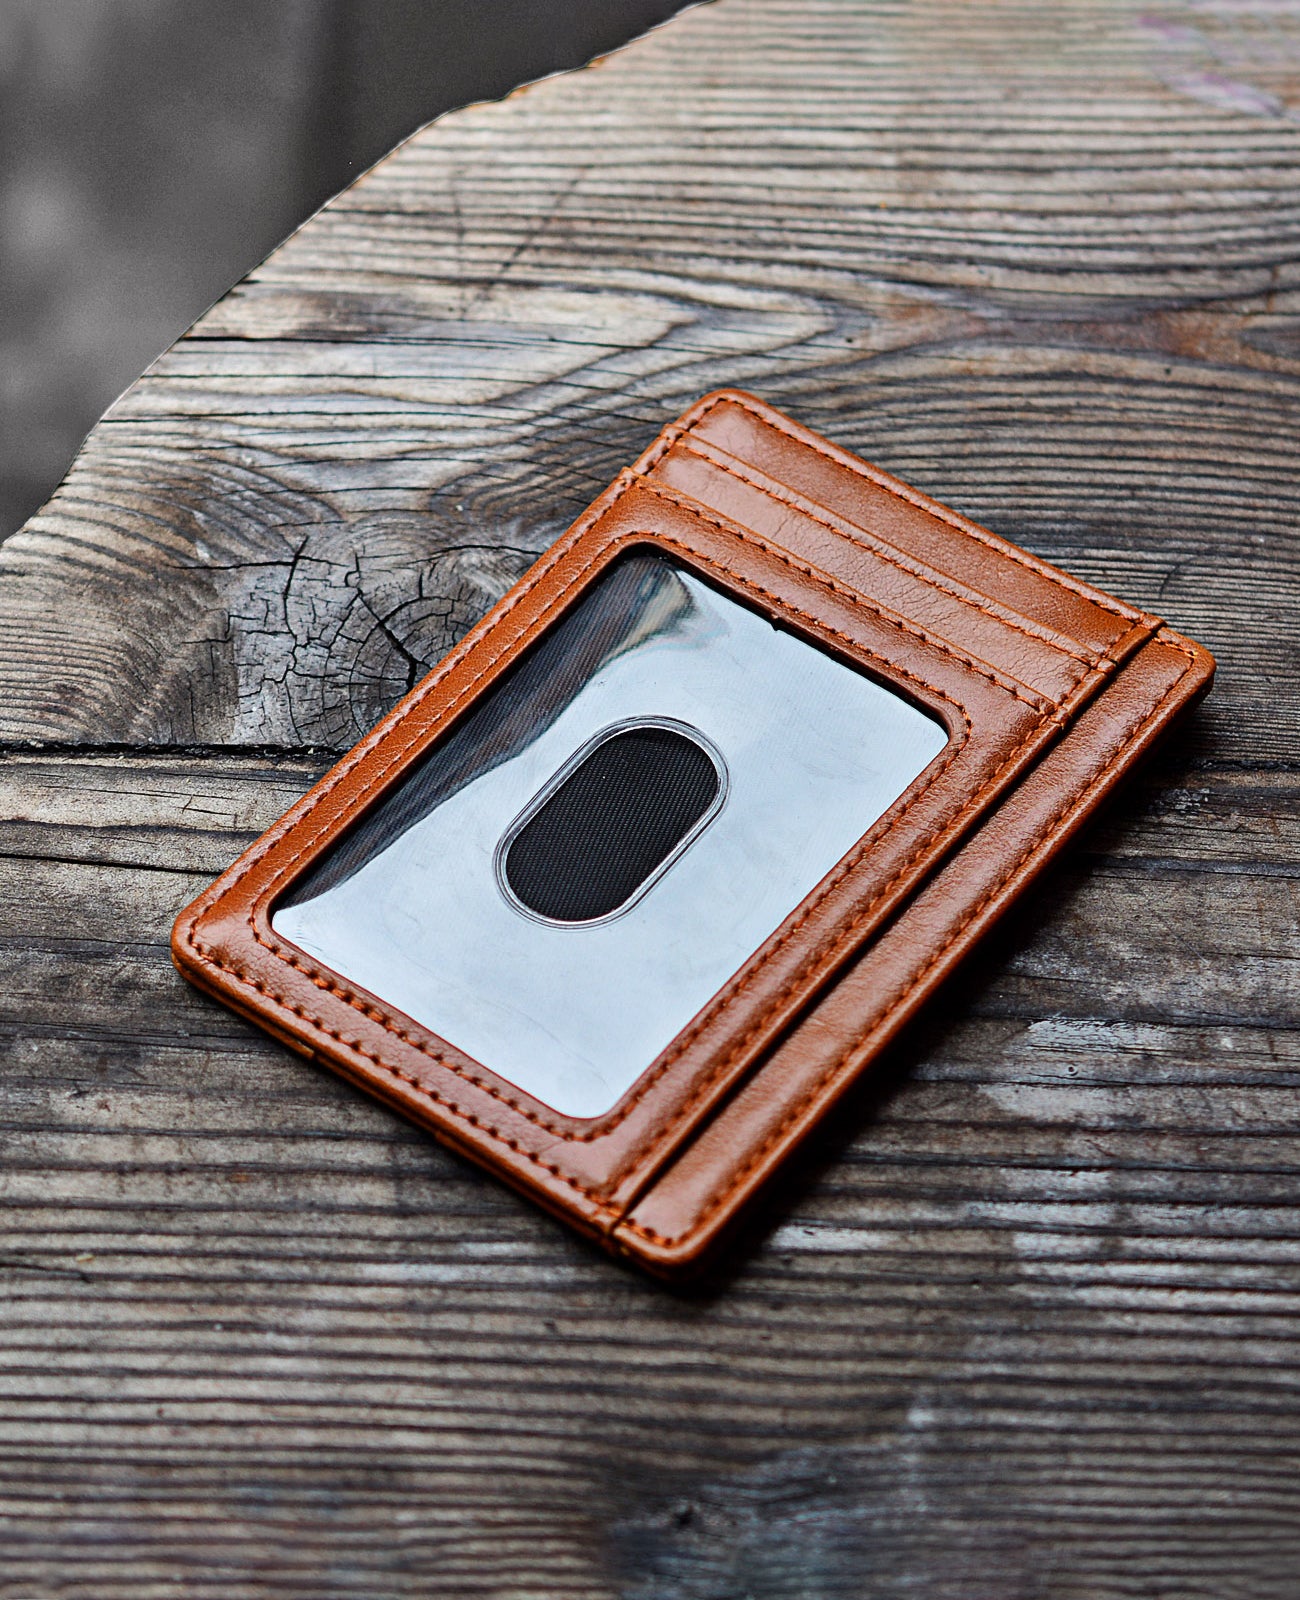 Buffway Slim Minimalist Front Pocket RFID Blocking Leather Wallets for Men and Women - Alaska Brown